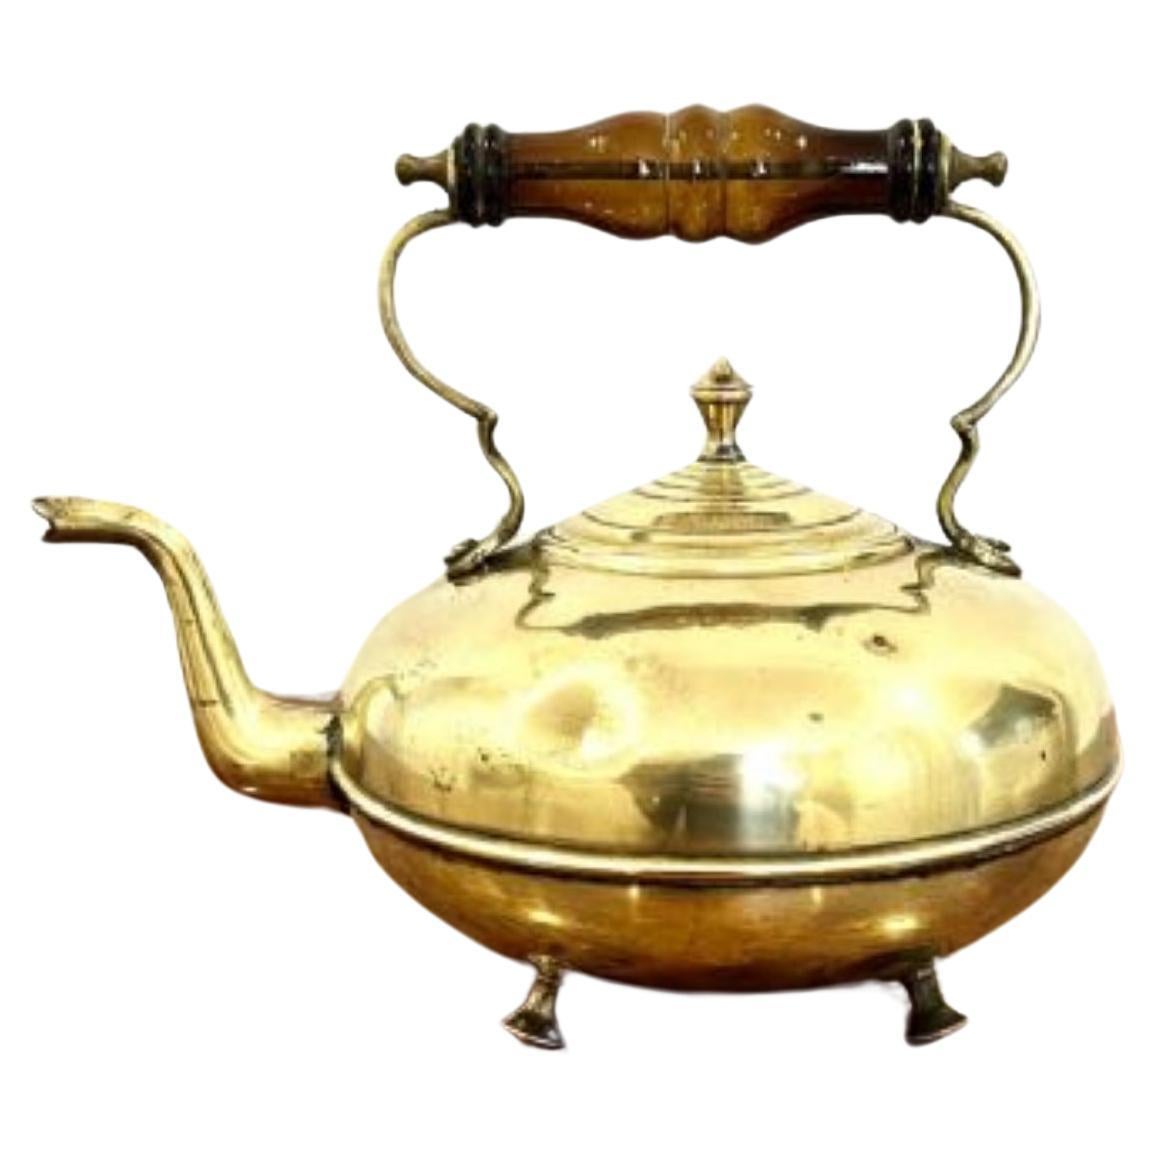 Unusual quality round antique Victorian brass kettle